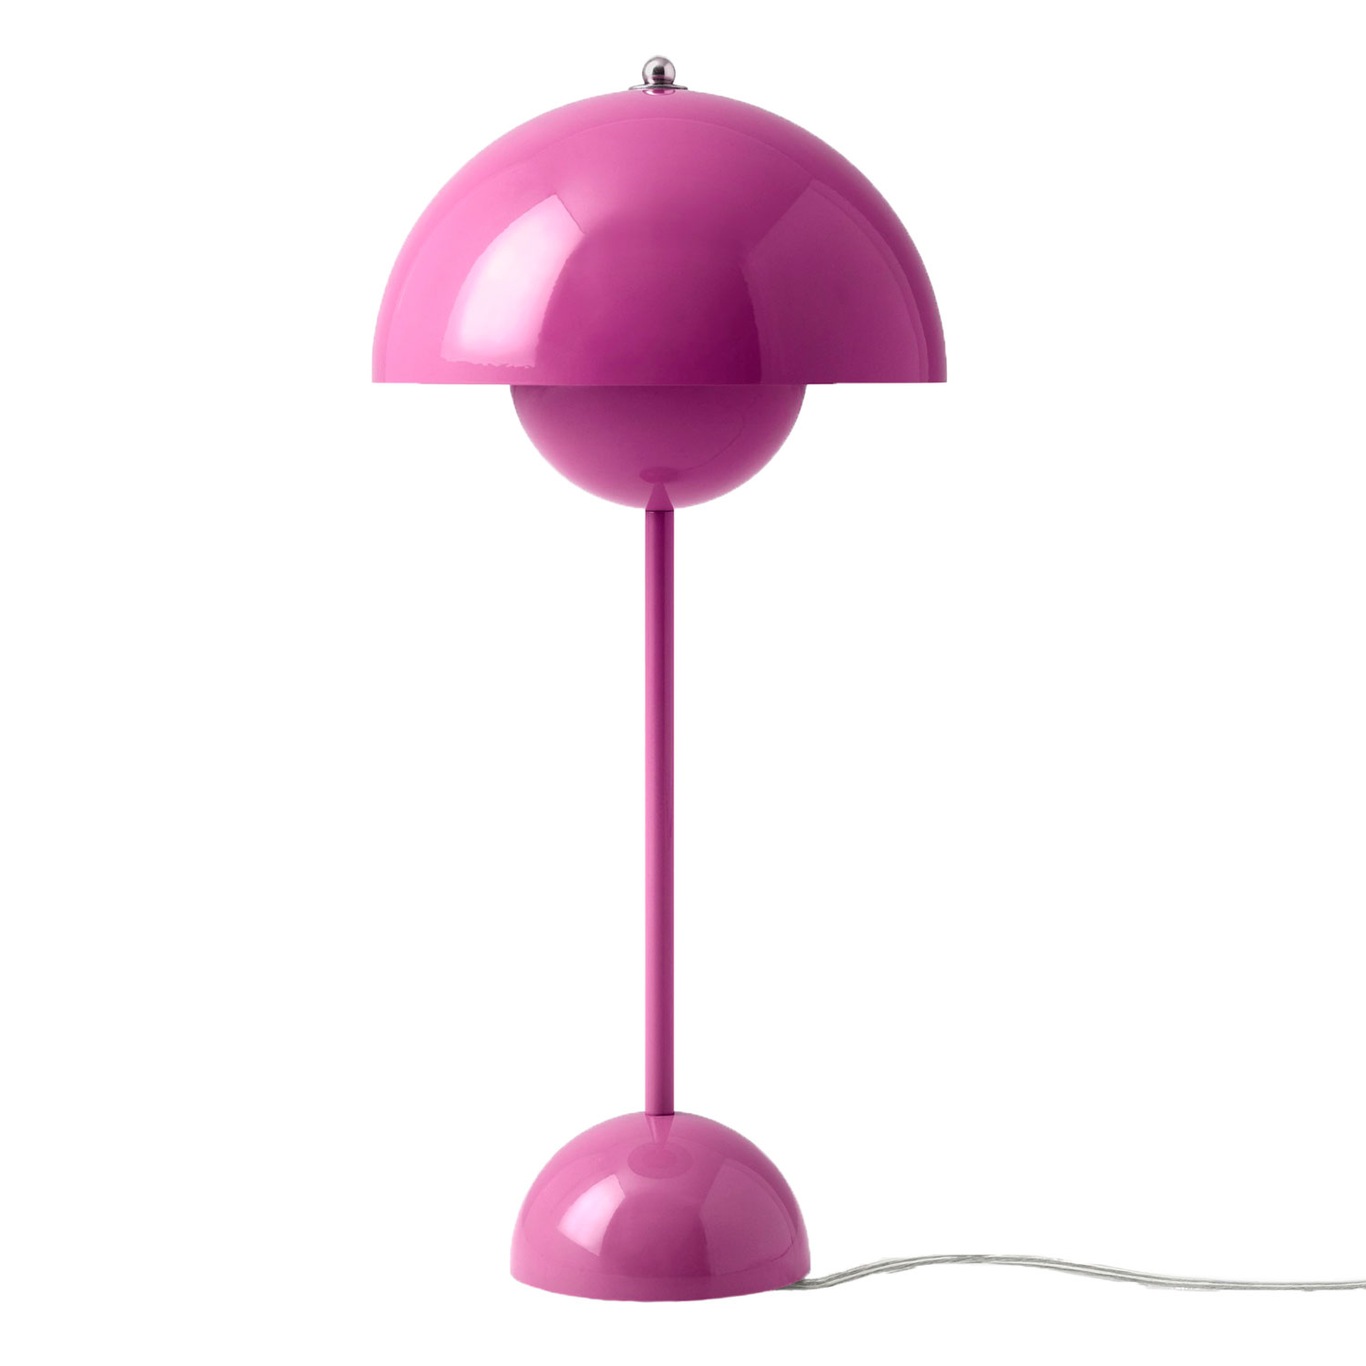 Flowerpot VP3 Tischlampe, Tangy Pink